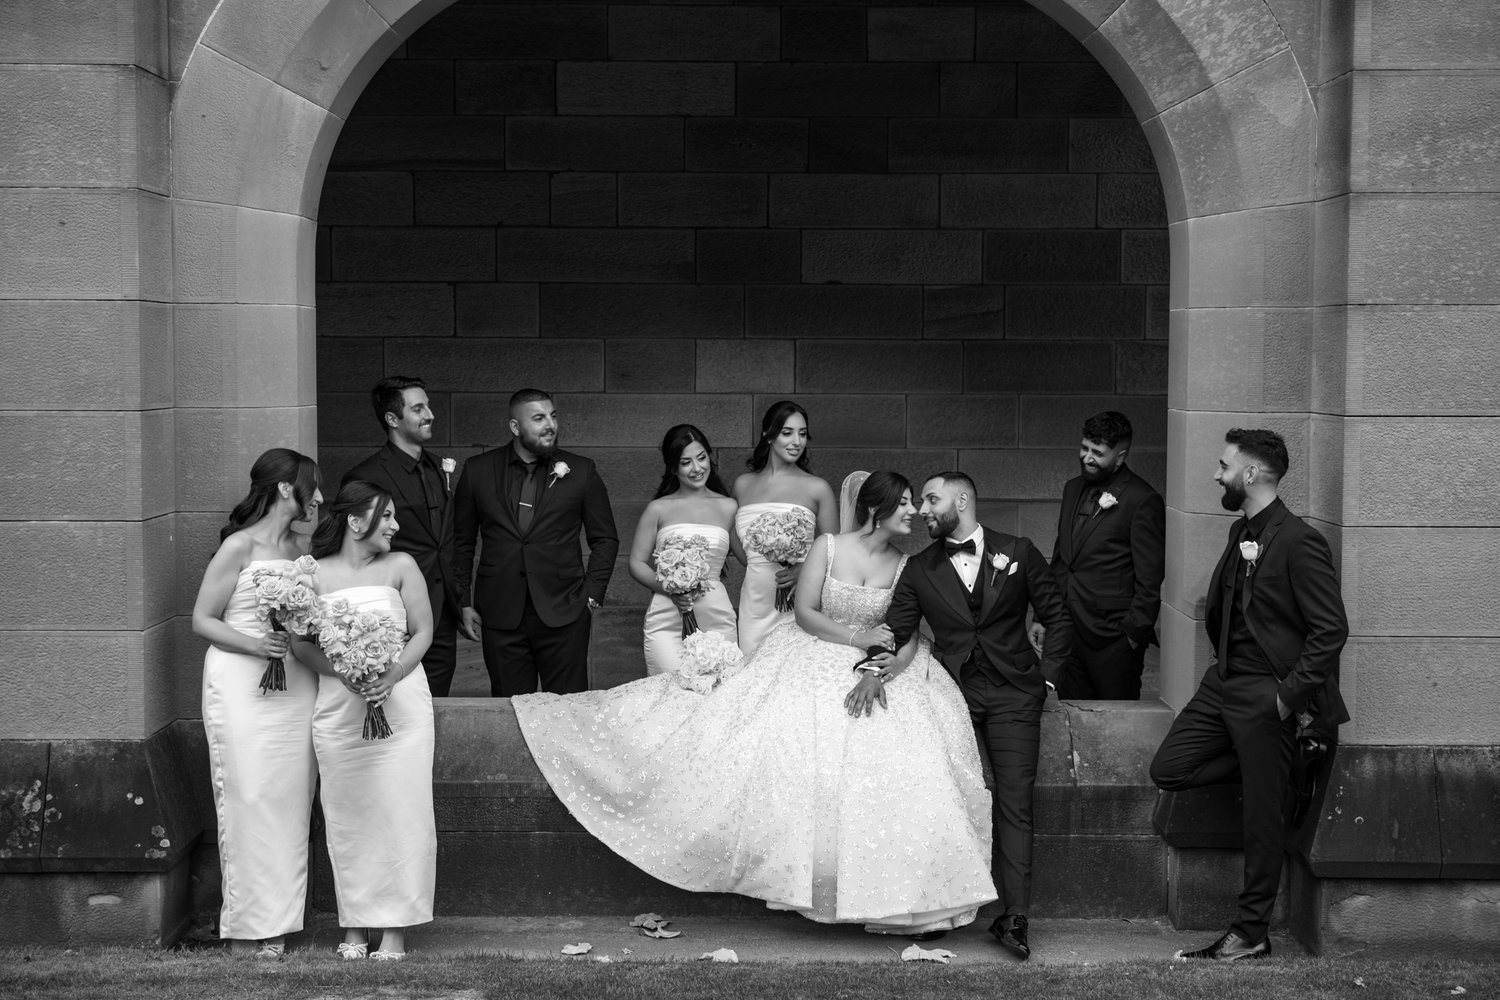 Nathan and Nicole's Wedding in Sydney Australia — SITTO STUDIOS